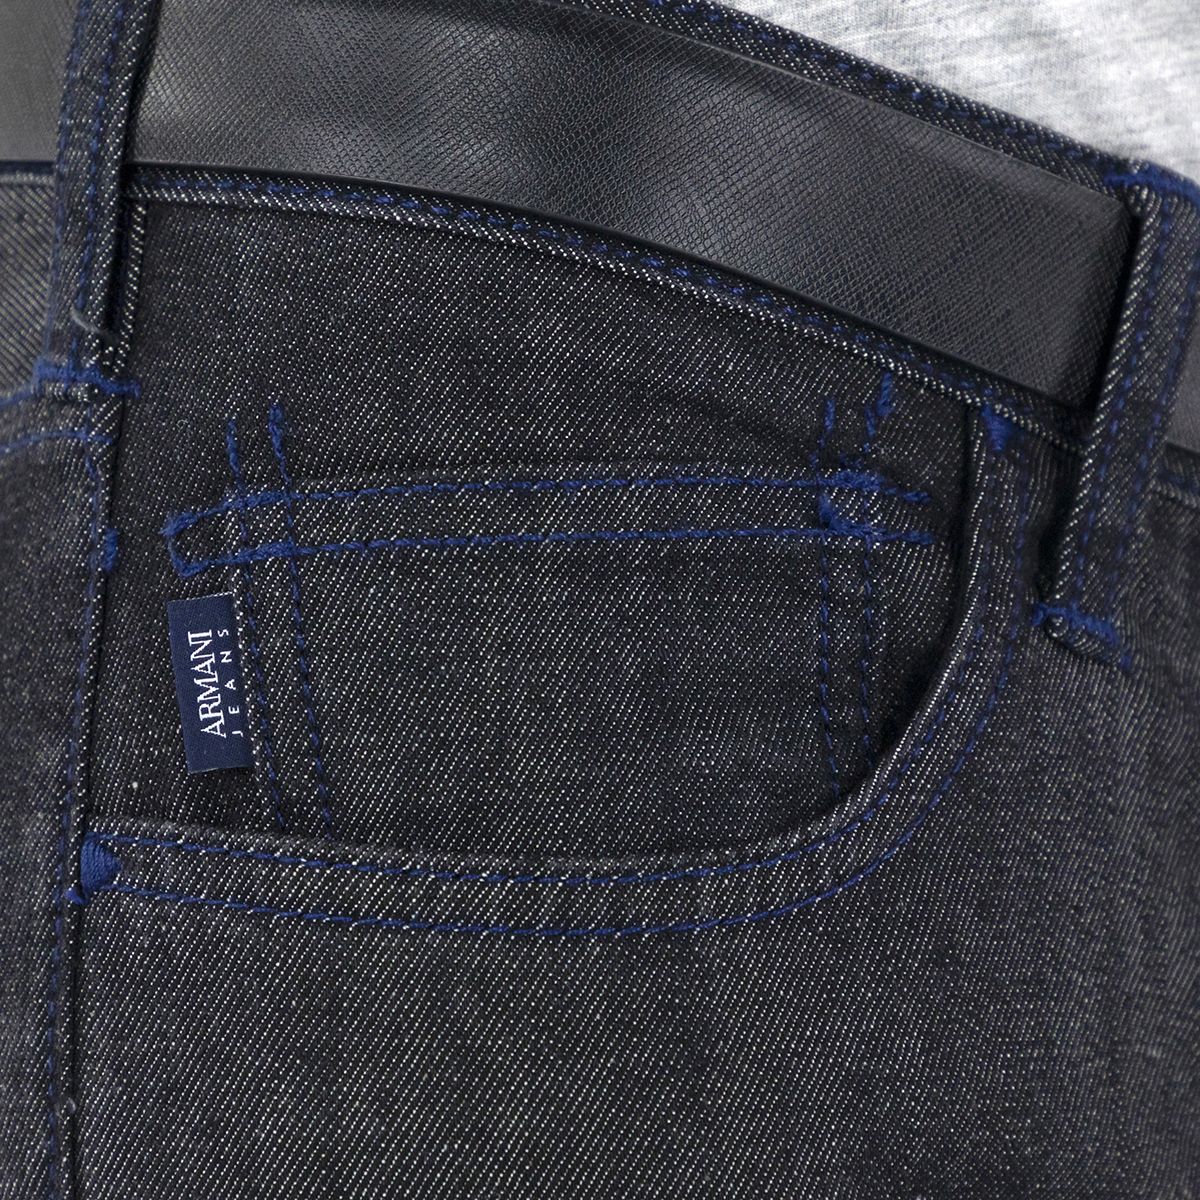 Armani Jeans 5 pockets Pants